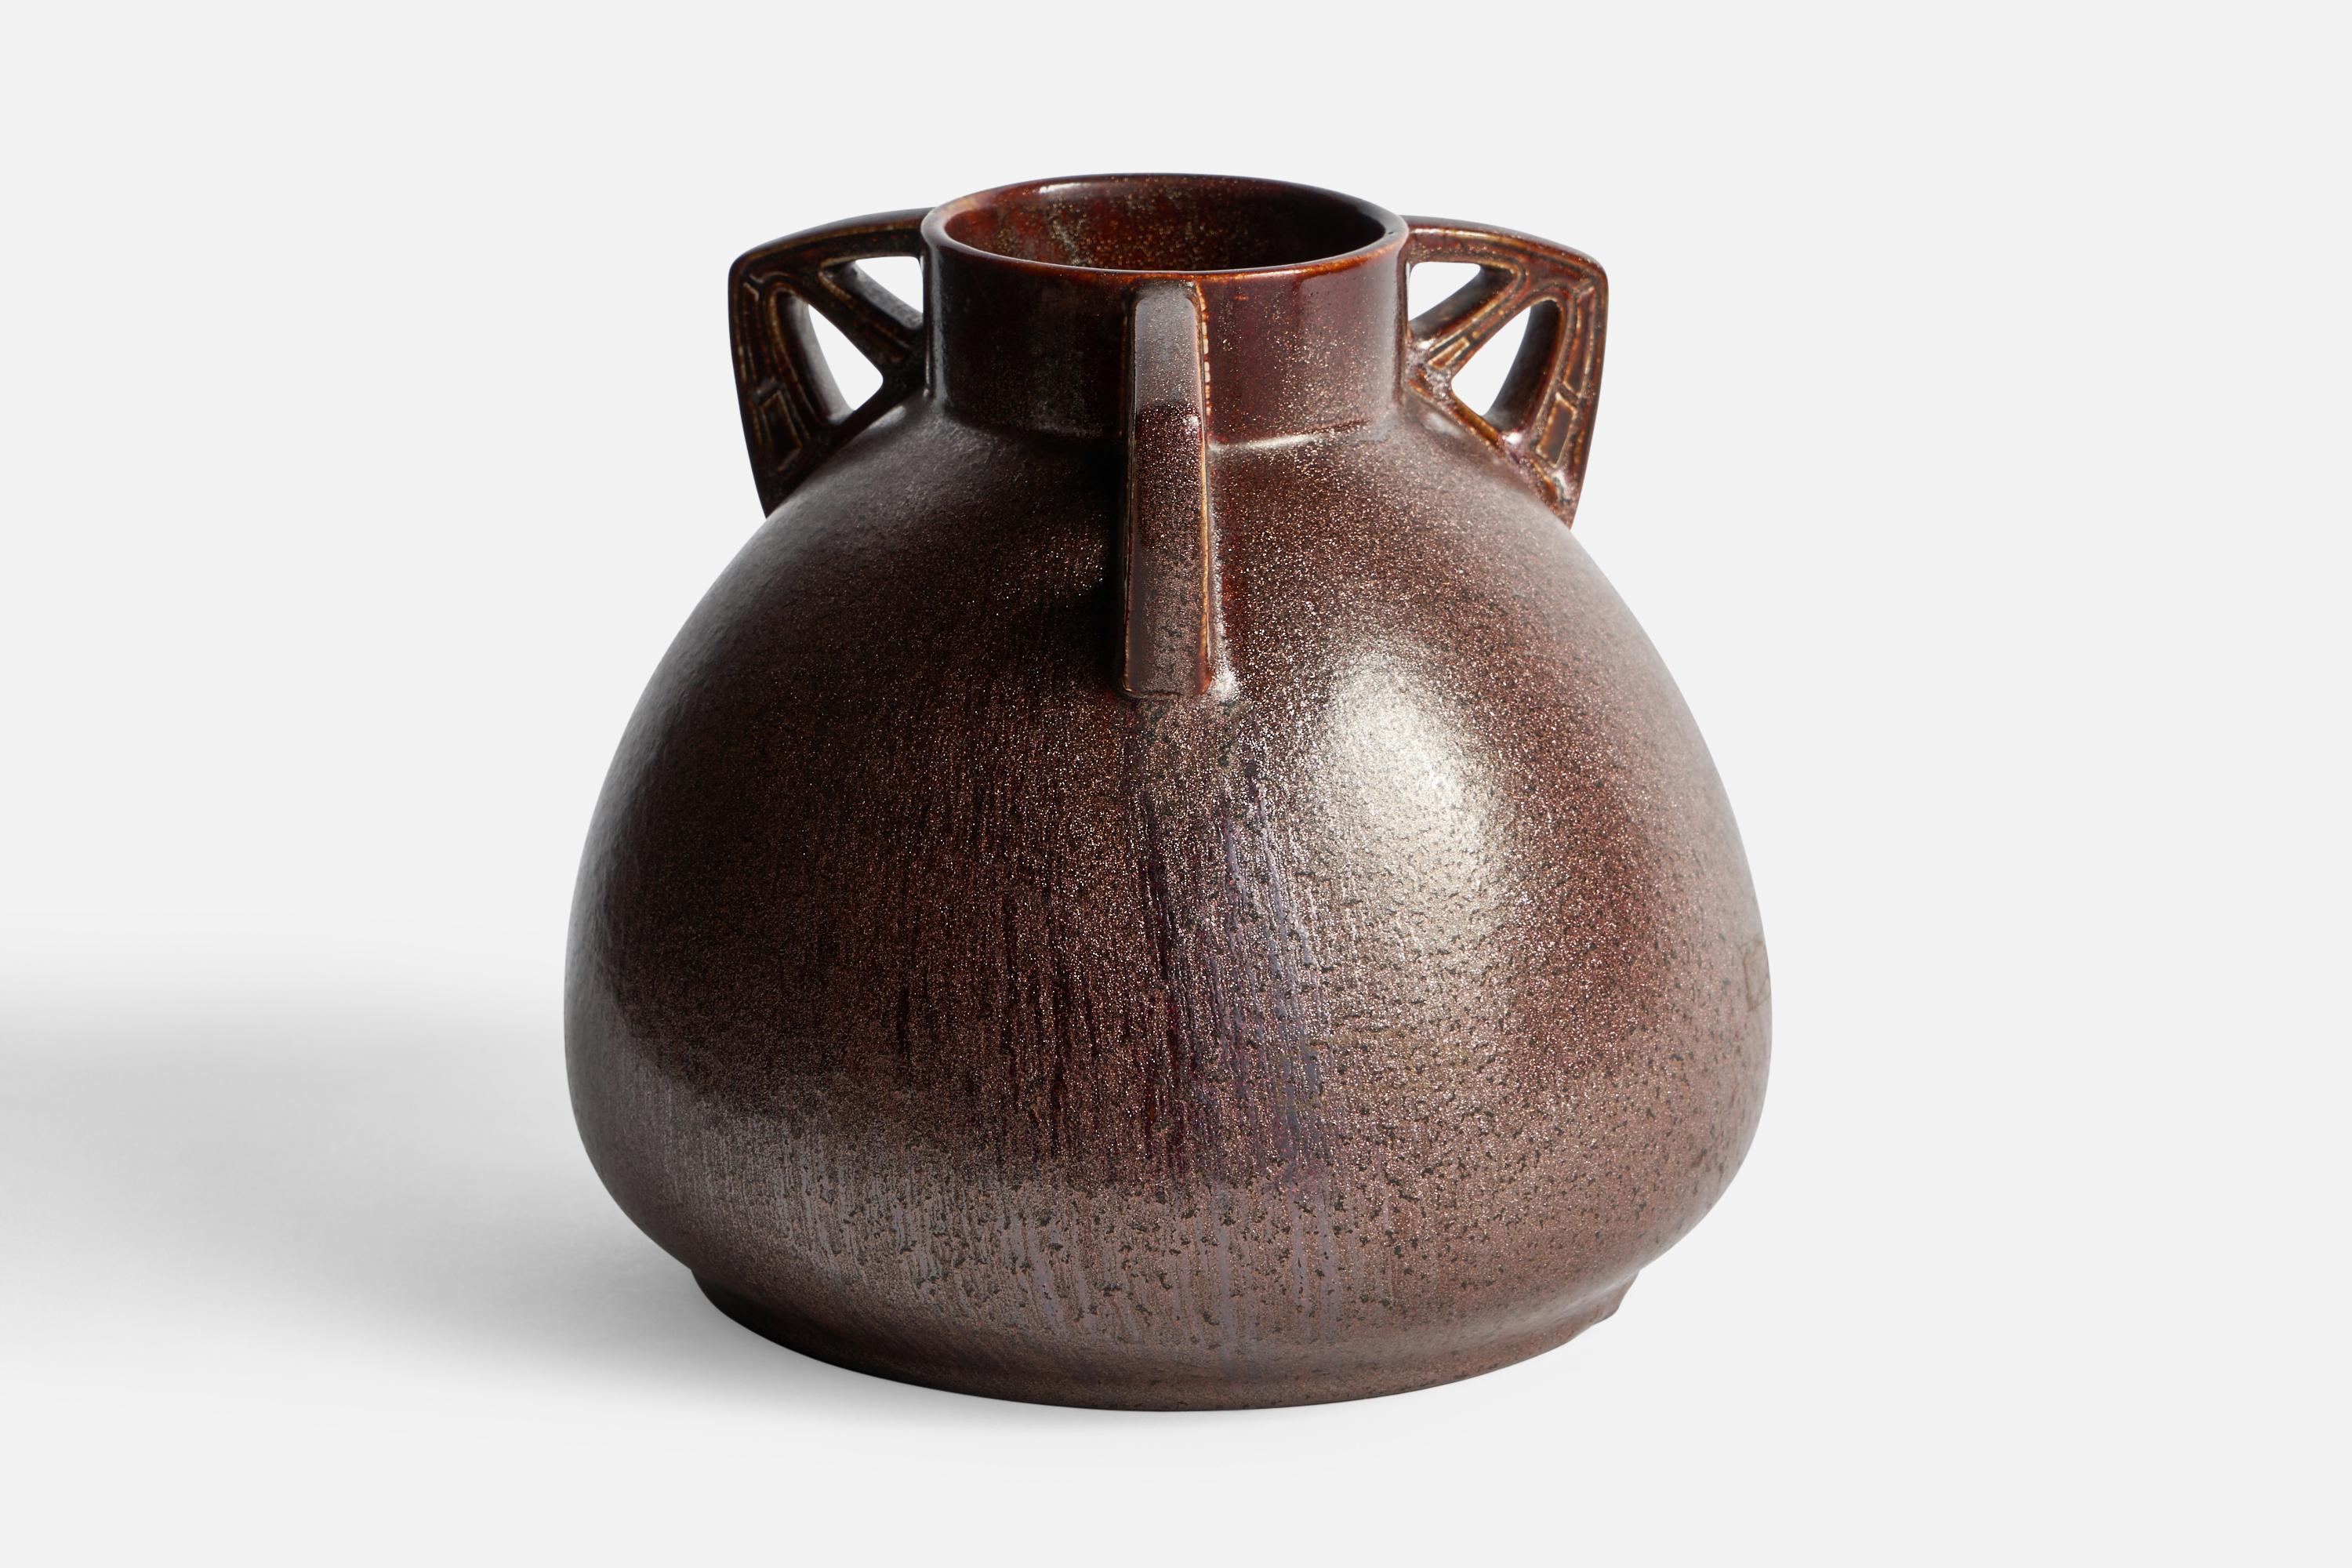 A brown-glazed ceramic vase designed by Alf Wallander and produced by Rörstrand, Sweden, 1910s.